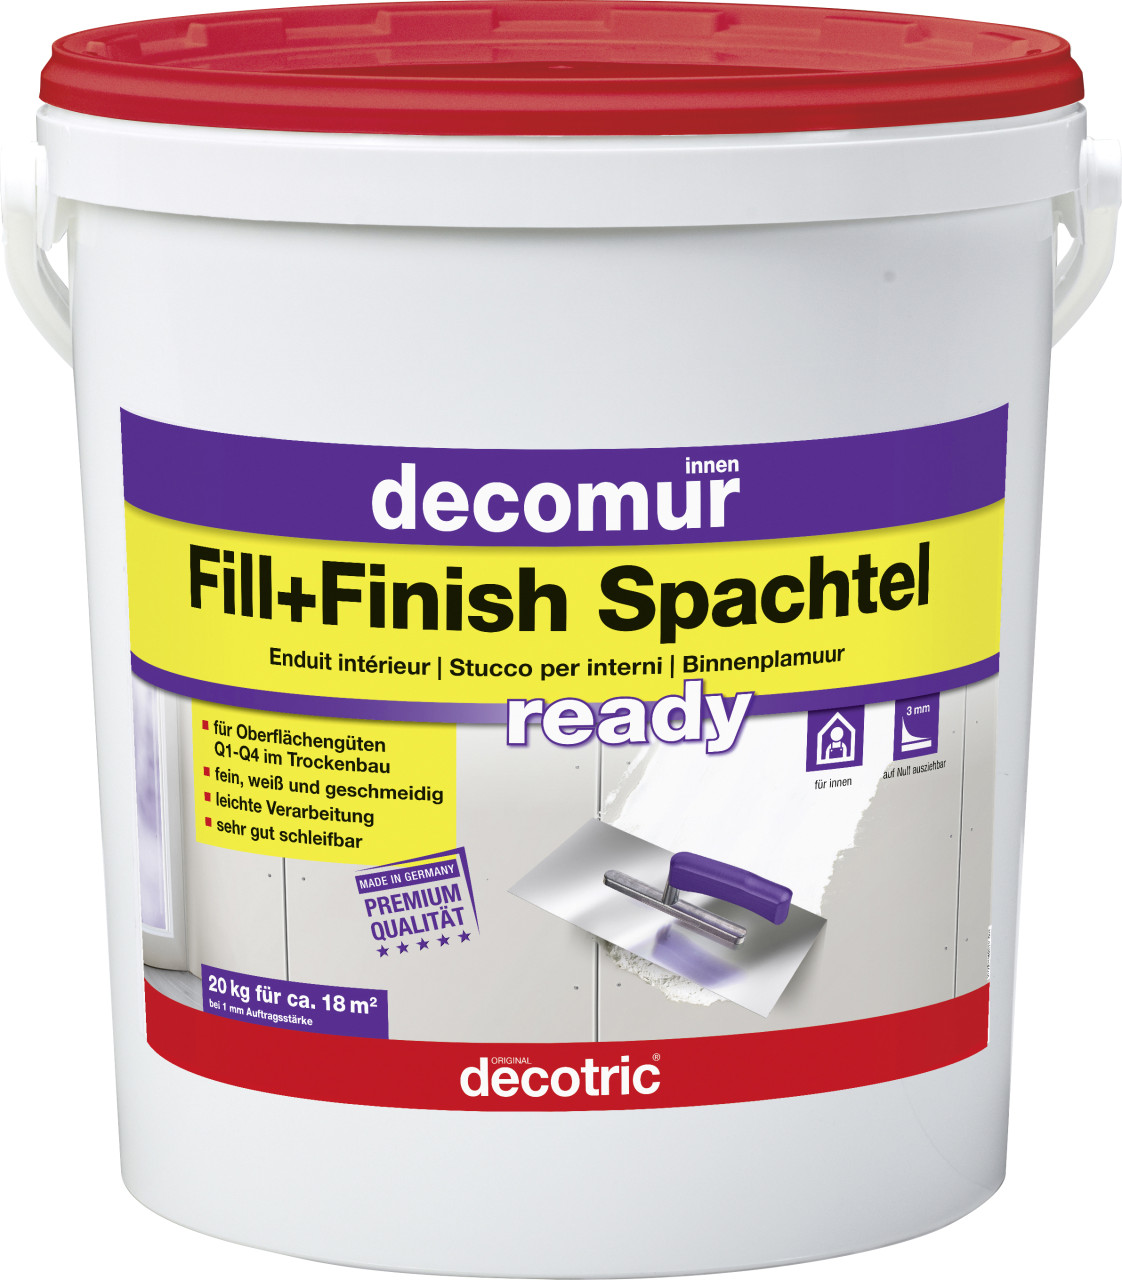 Decotric Decomur Fill+Finish Spachtel ready 20 kg von Decotric